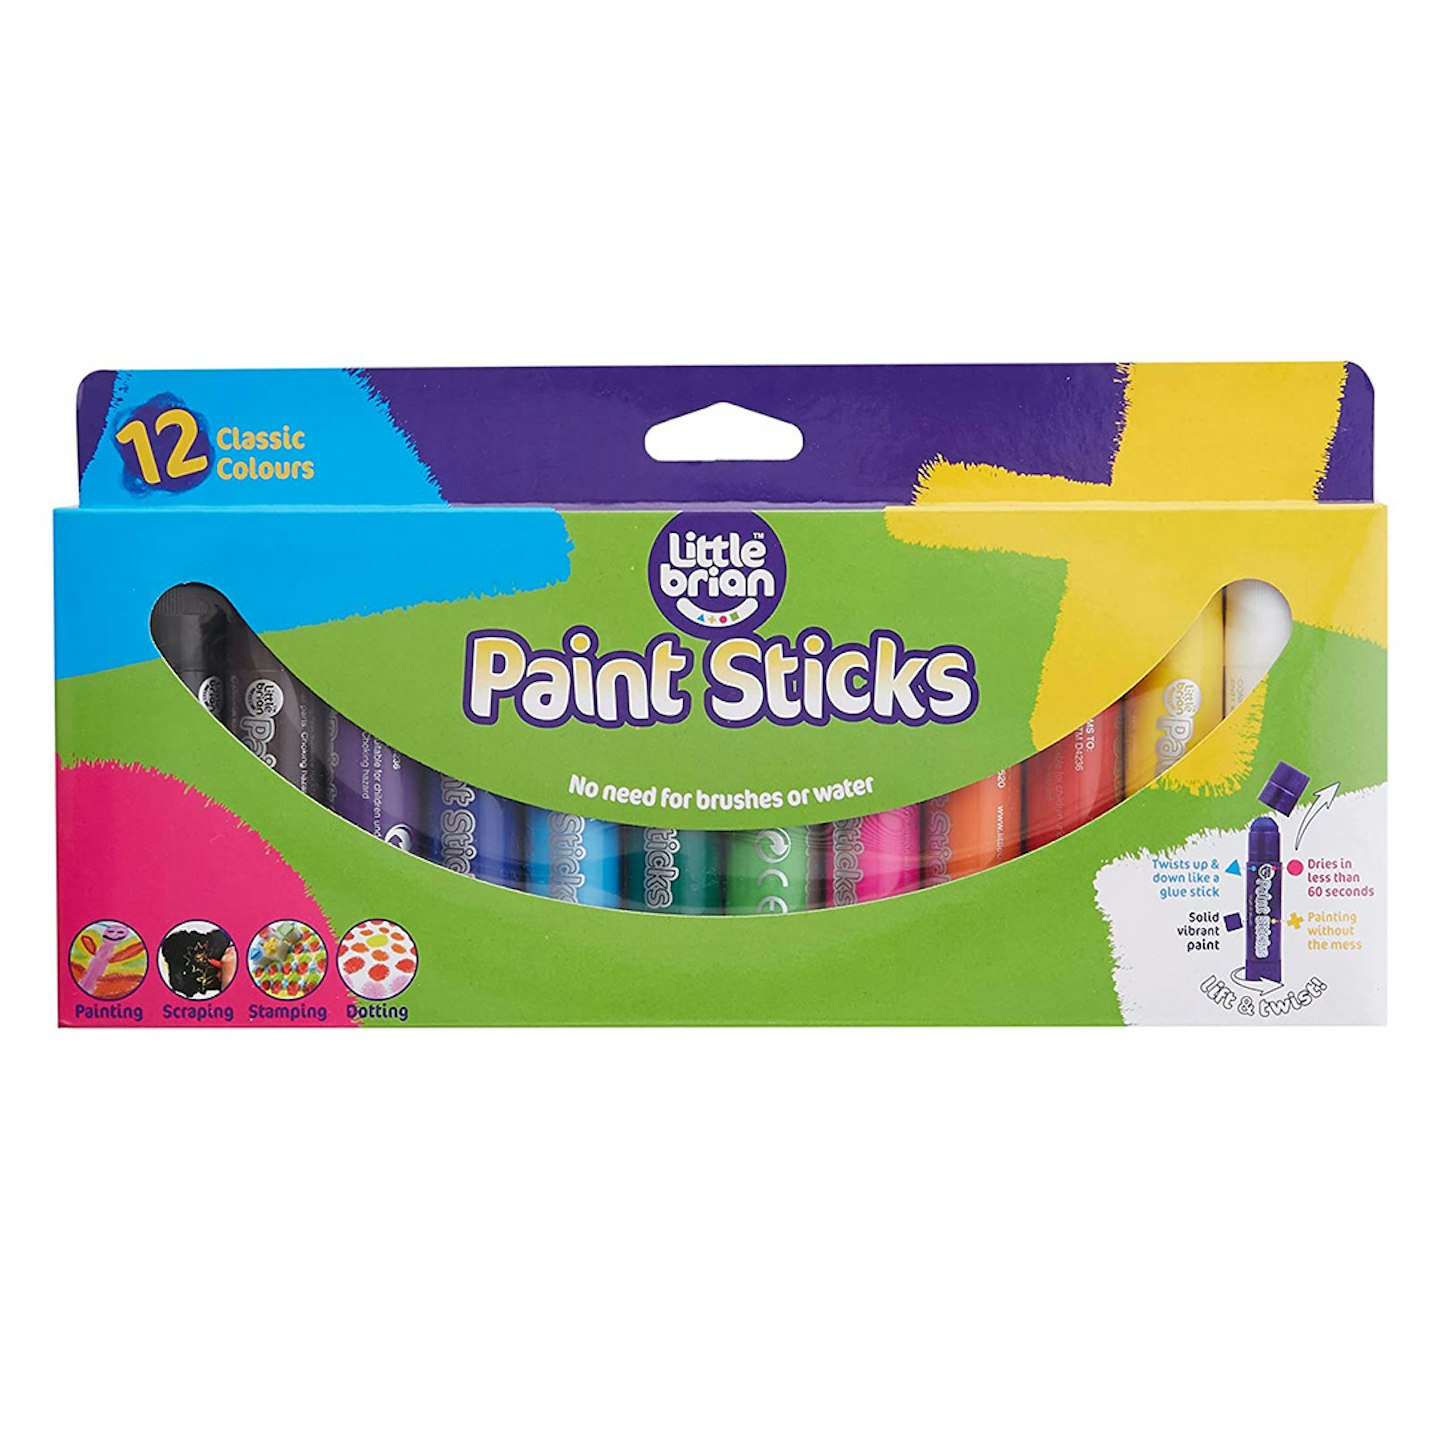 Little Brian Paint Sticks Classic Colours 12 Assorted